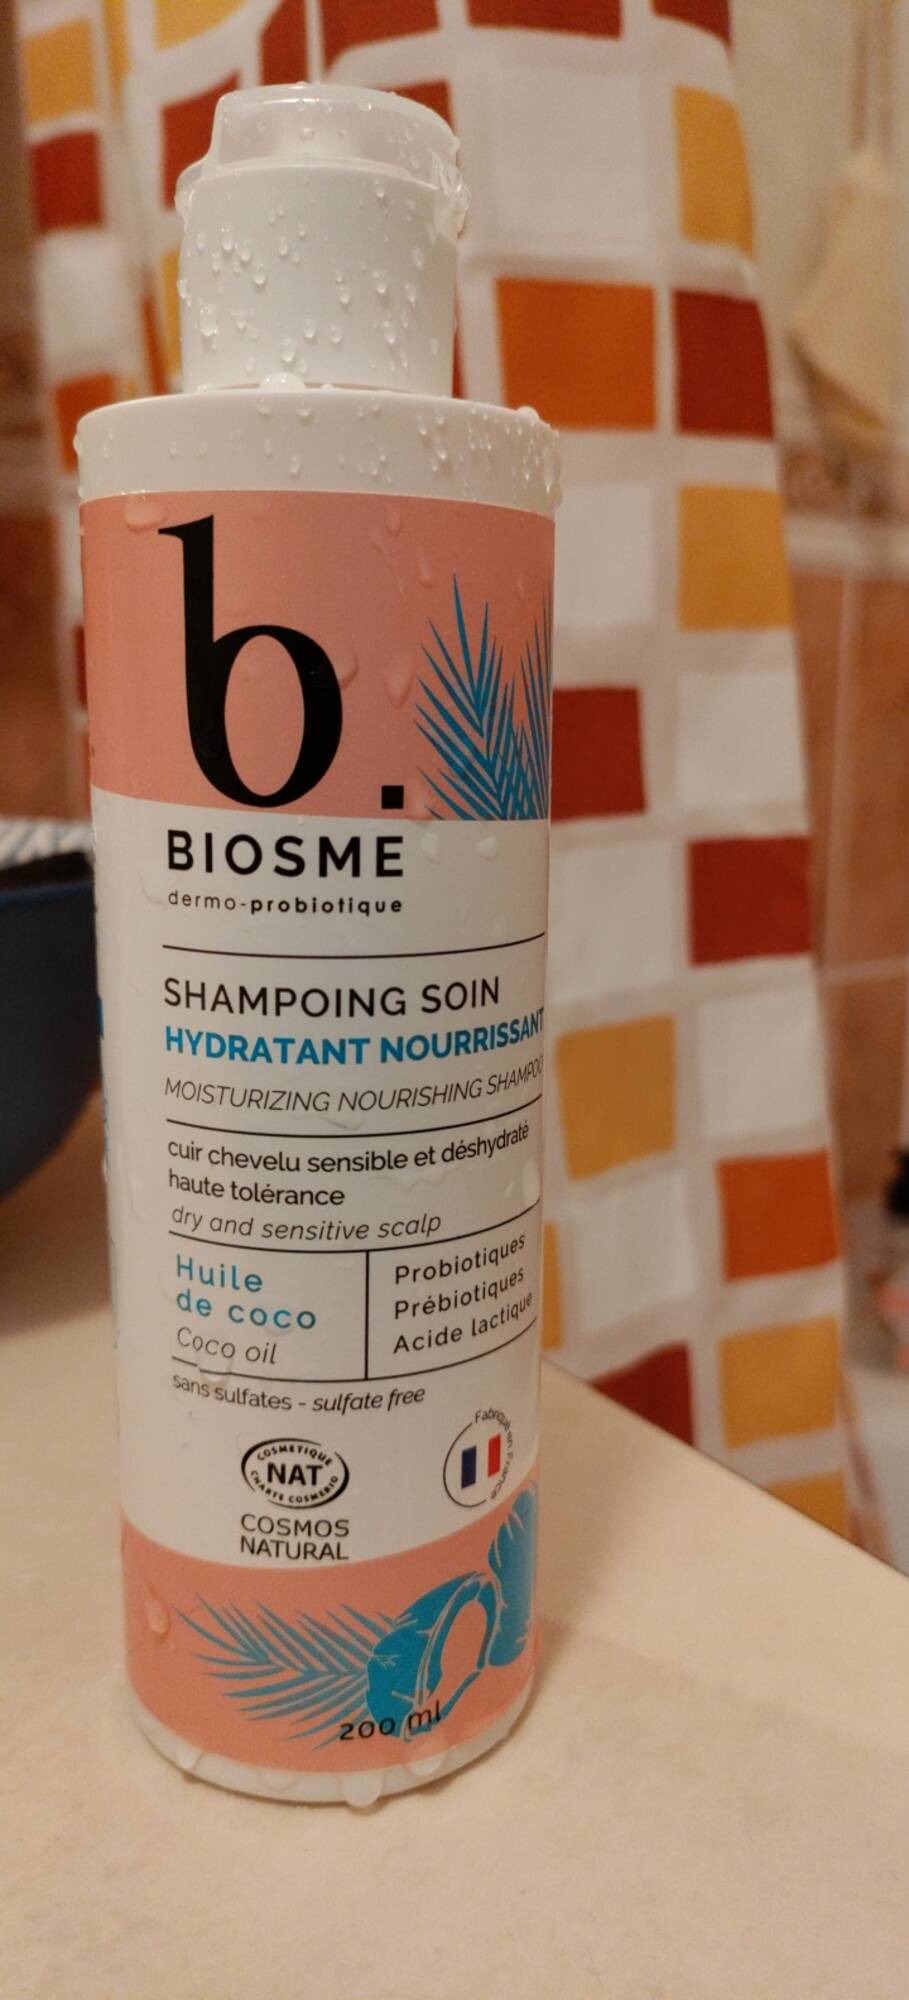 BIOSME - Shampooing soin hydratant nourrissant